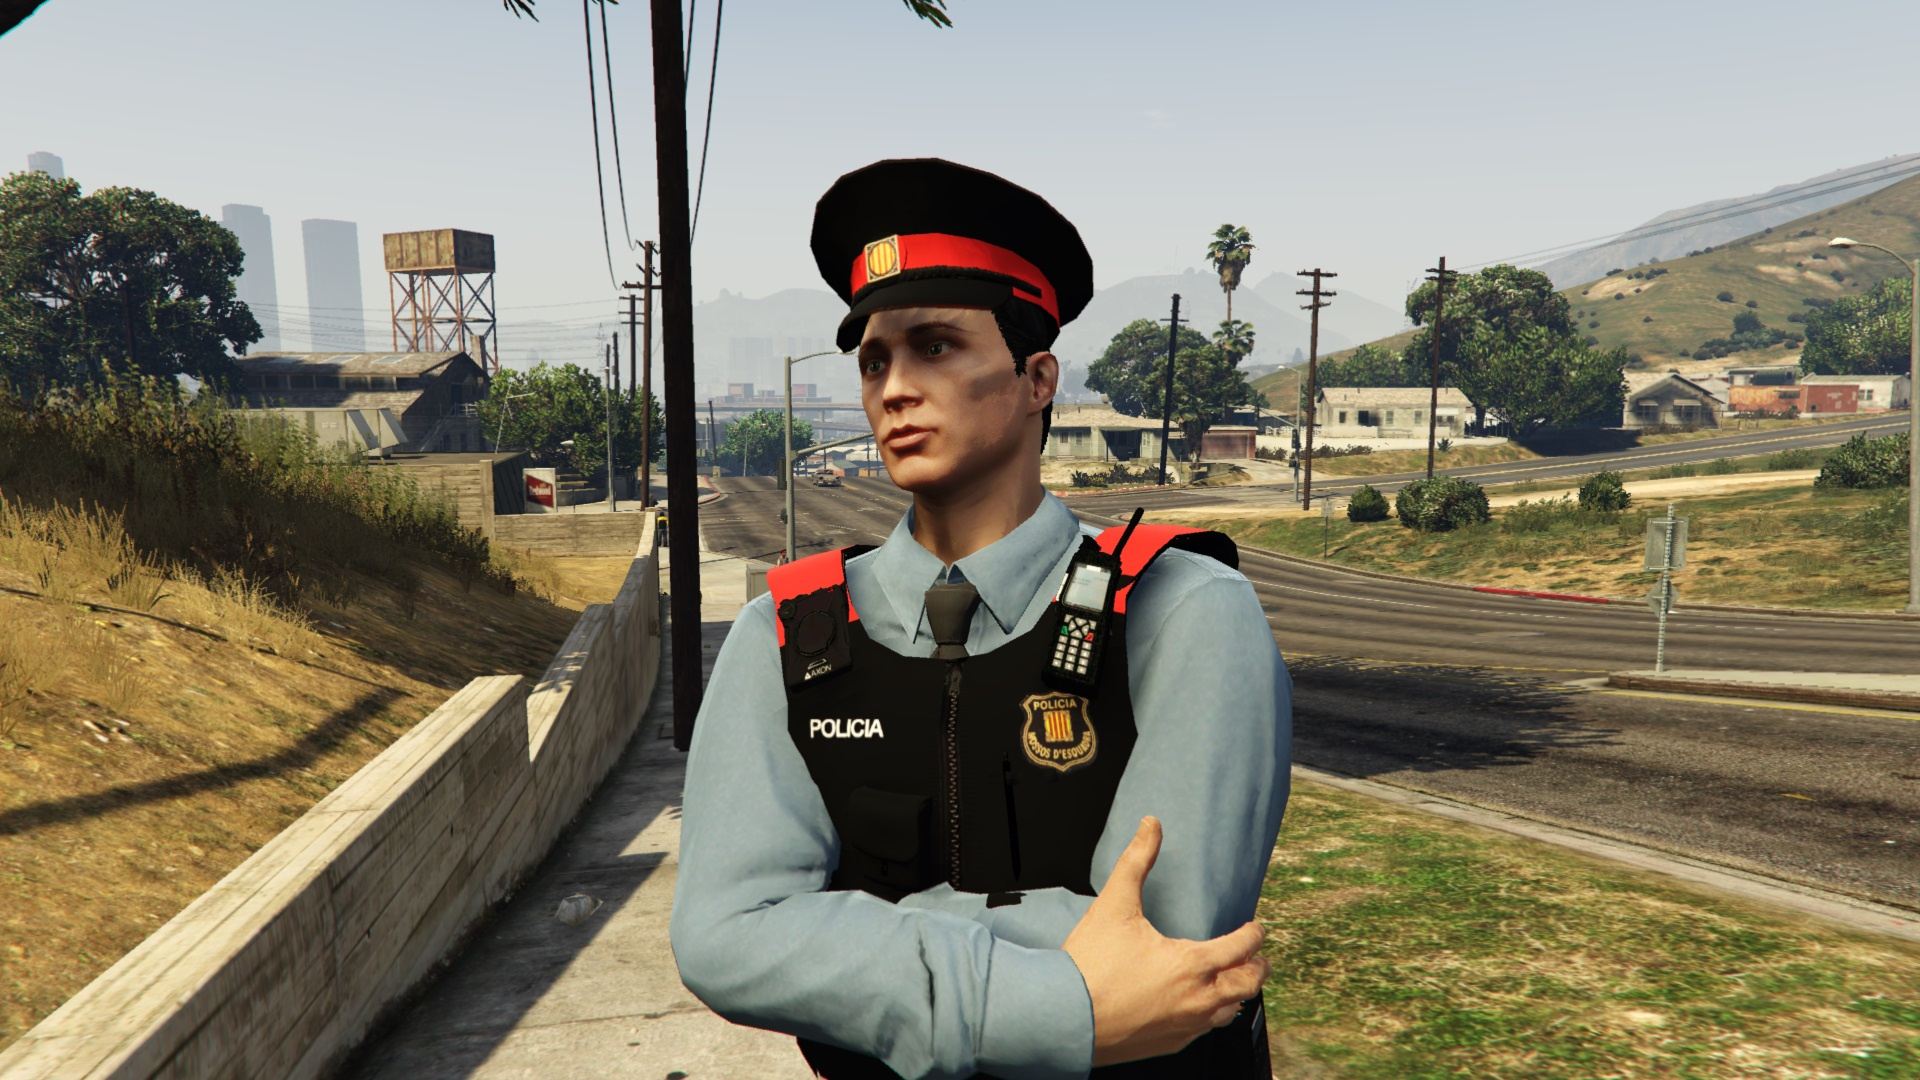 Police uniform in gta 5 фото 19